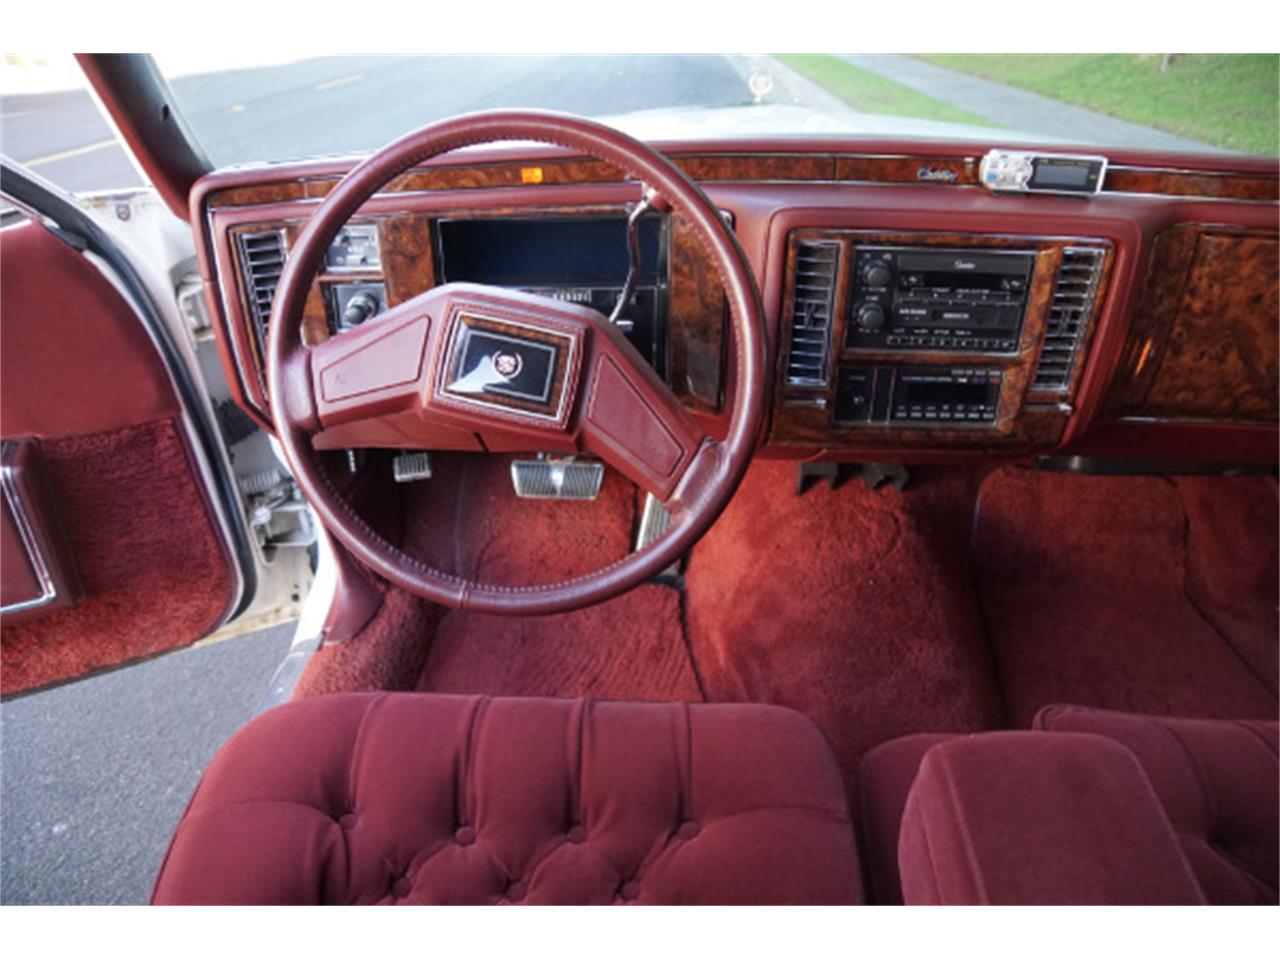 1992 Cadillac Brougham For Sale Classiccars Com Cc 1060338